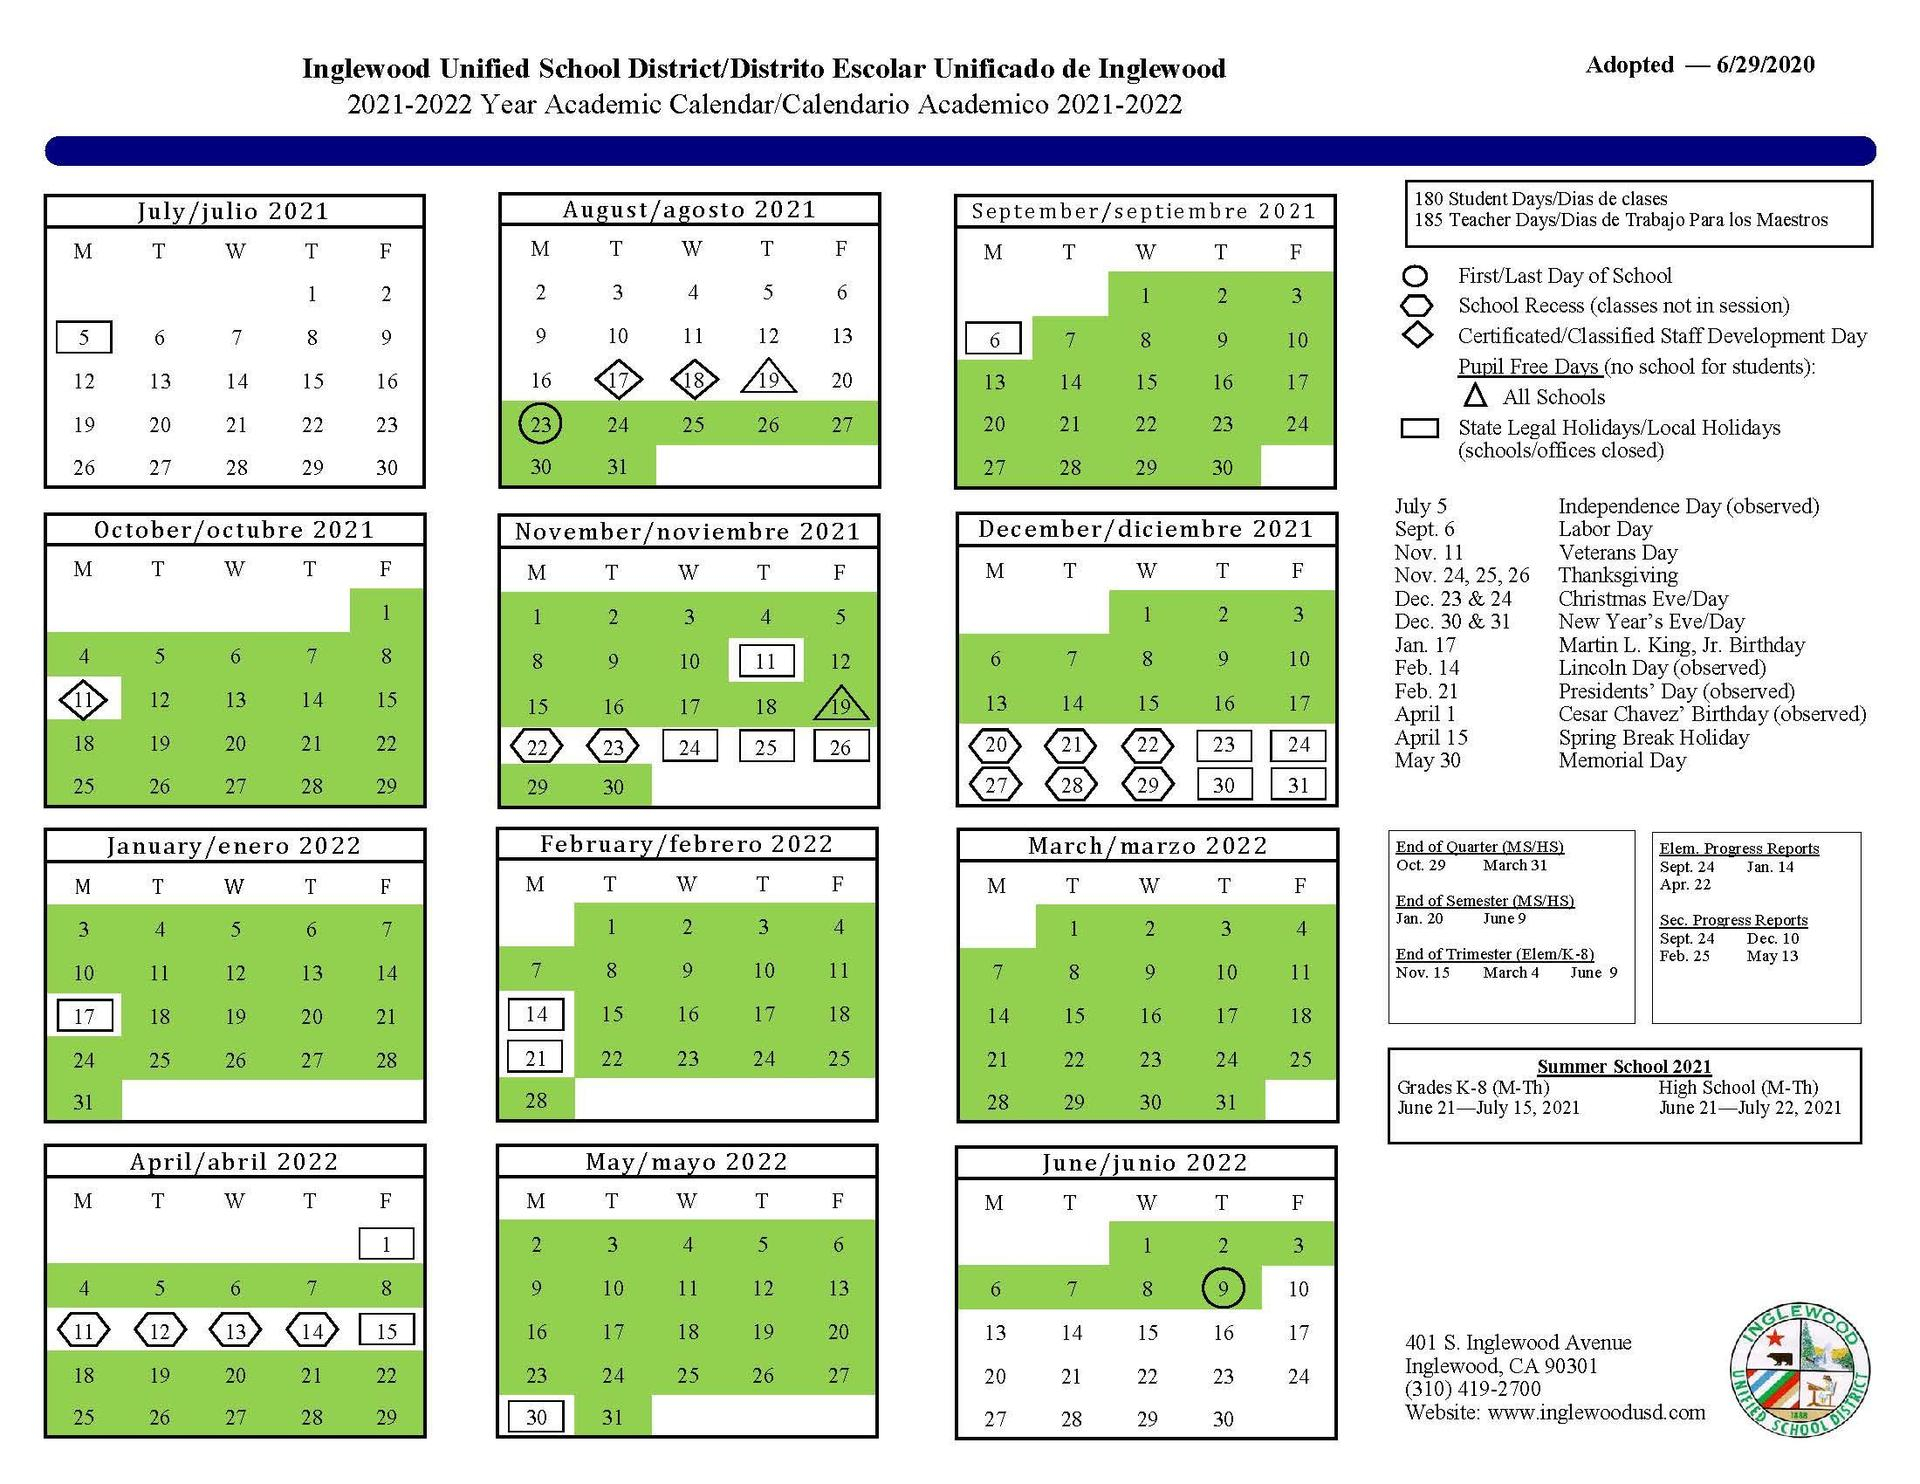 asu-academic-calendar-2023-spring-academiccalendars